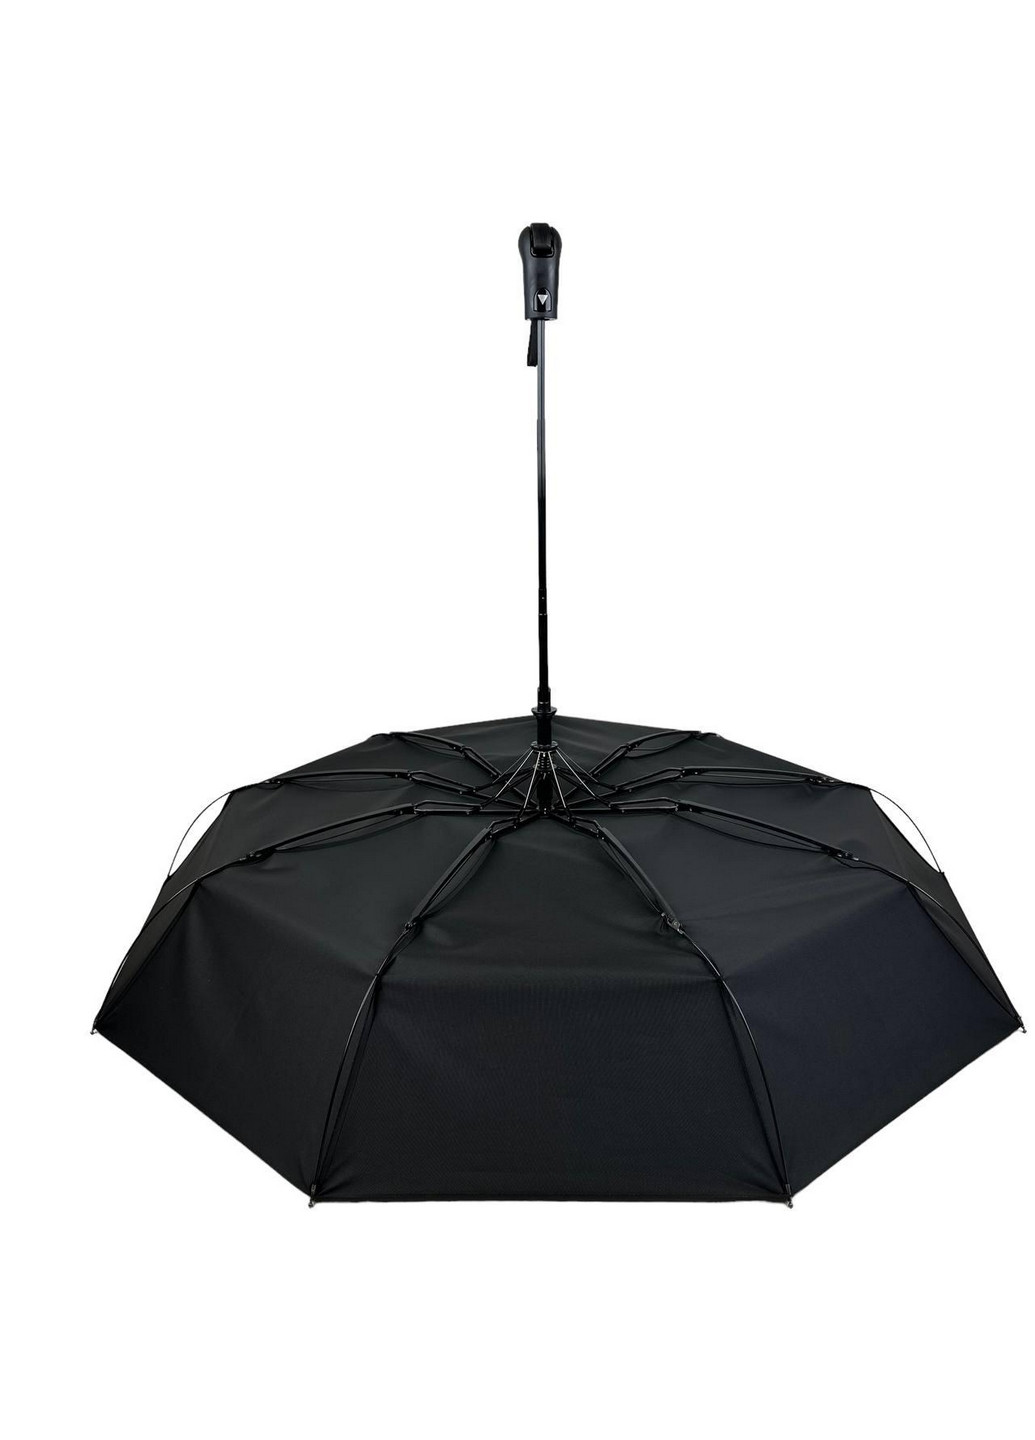 Мужской складной зонт полуавтомат Feeling Rain (276392380)